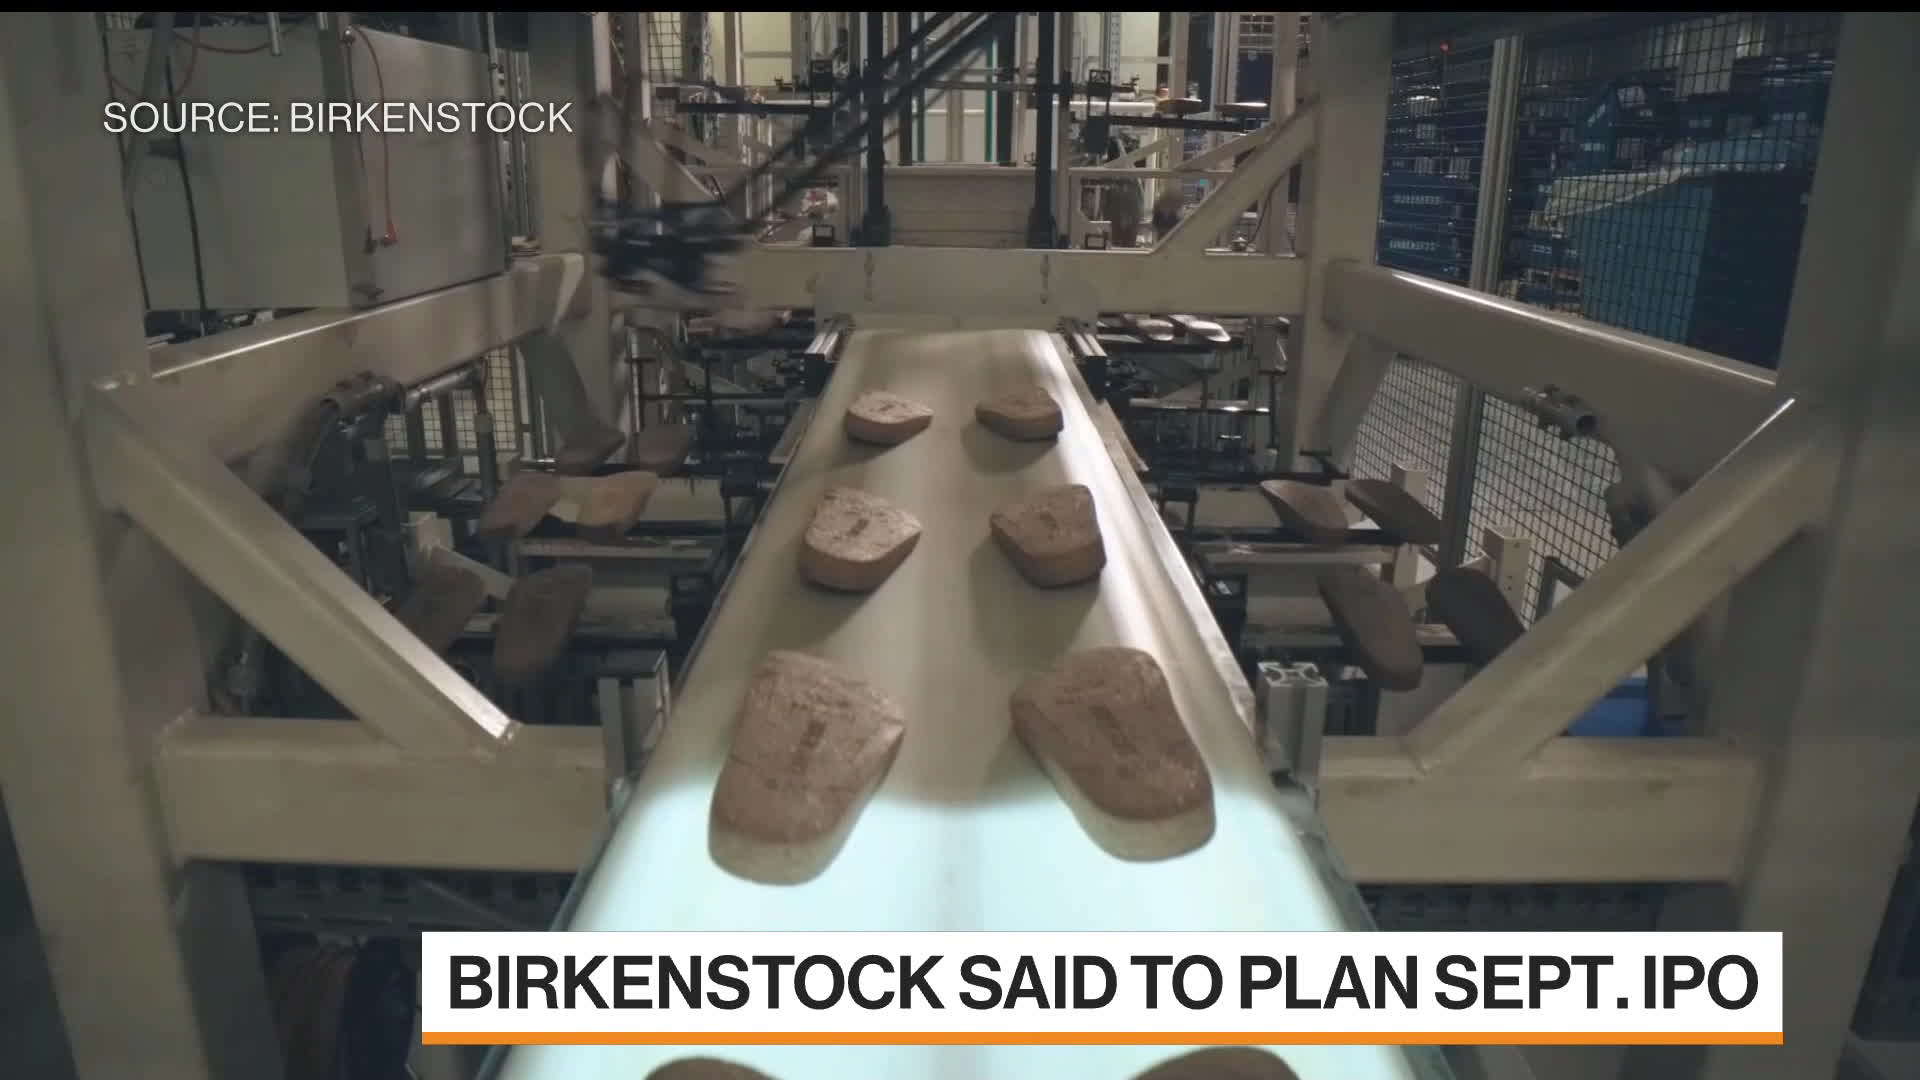 Birkenstock owner eyes $8bn valuation in September IPO